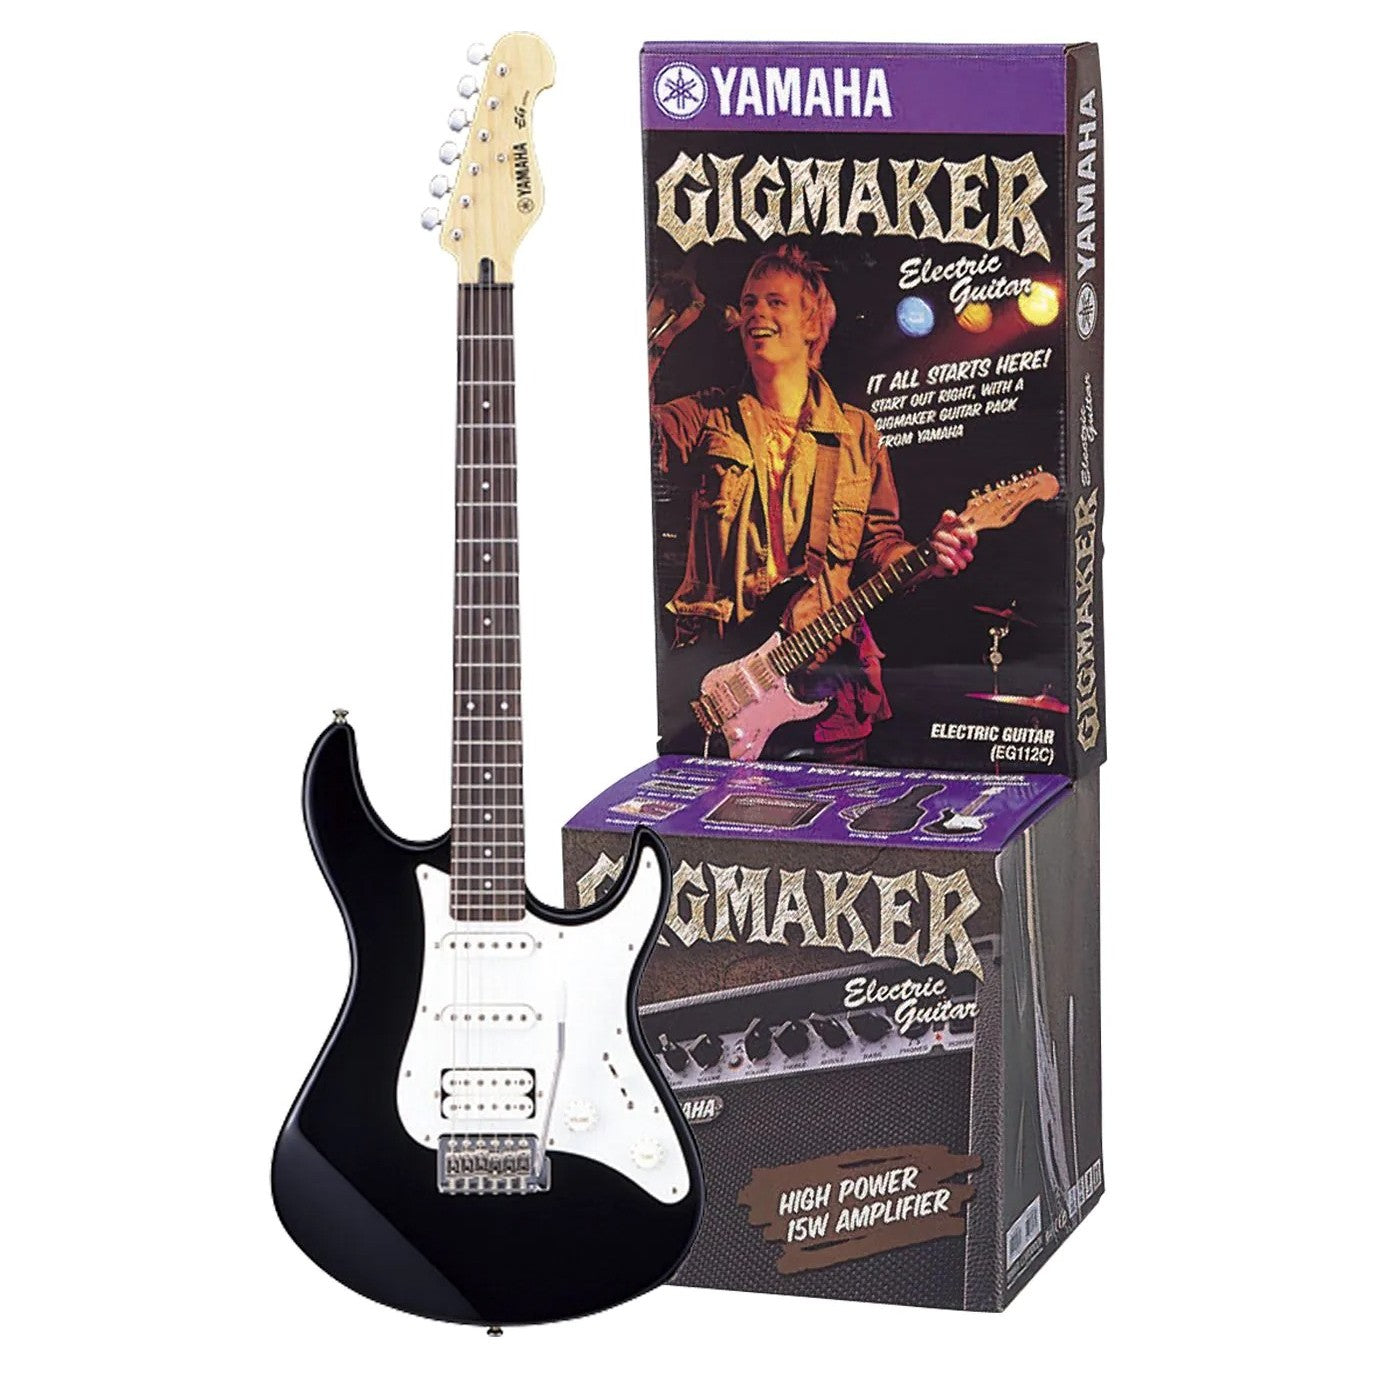 Yamaha Gigmaker Series Guitars